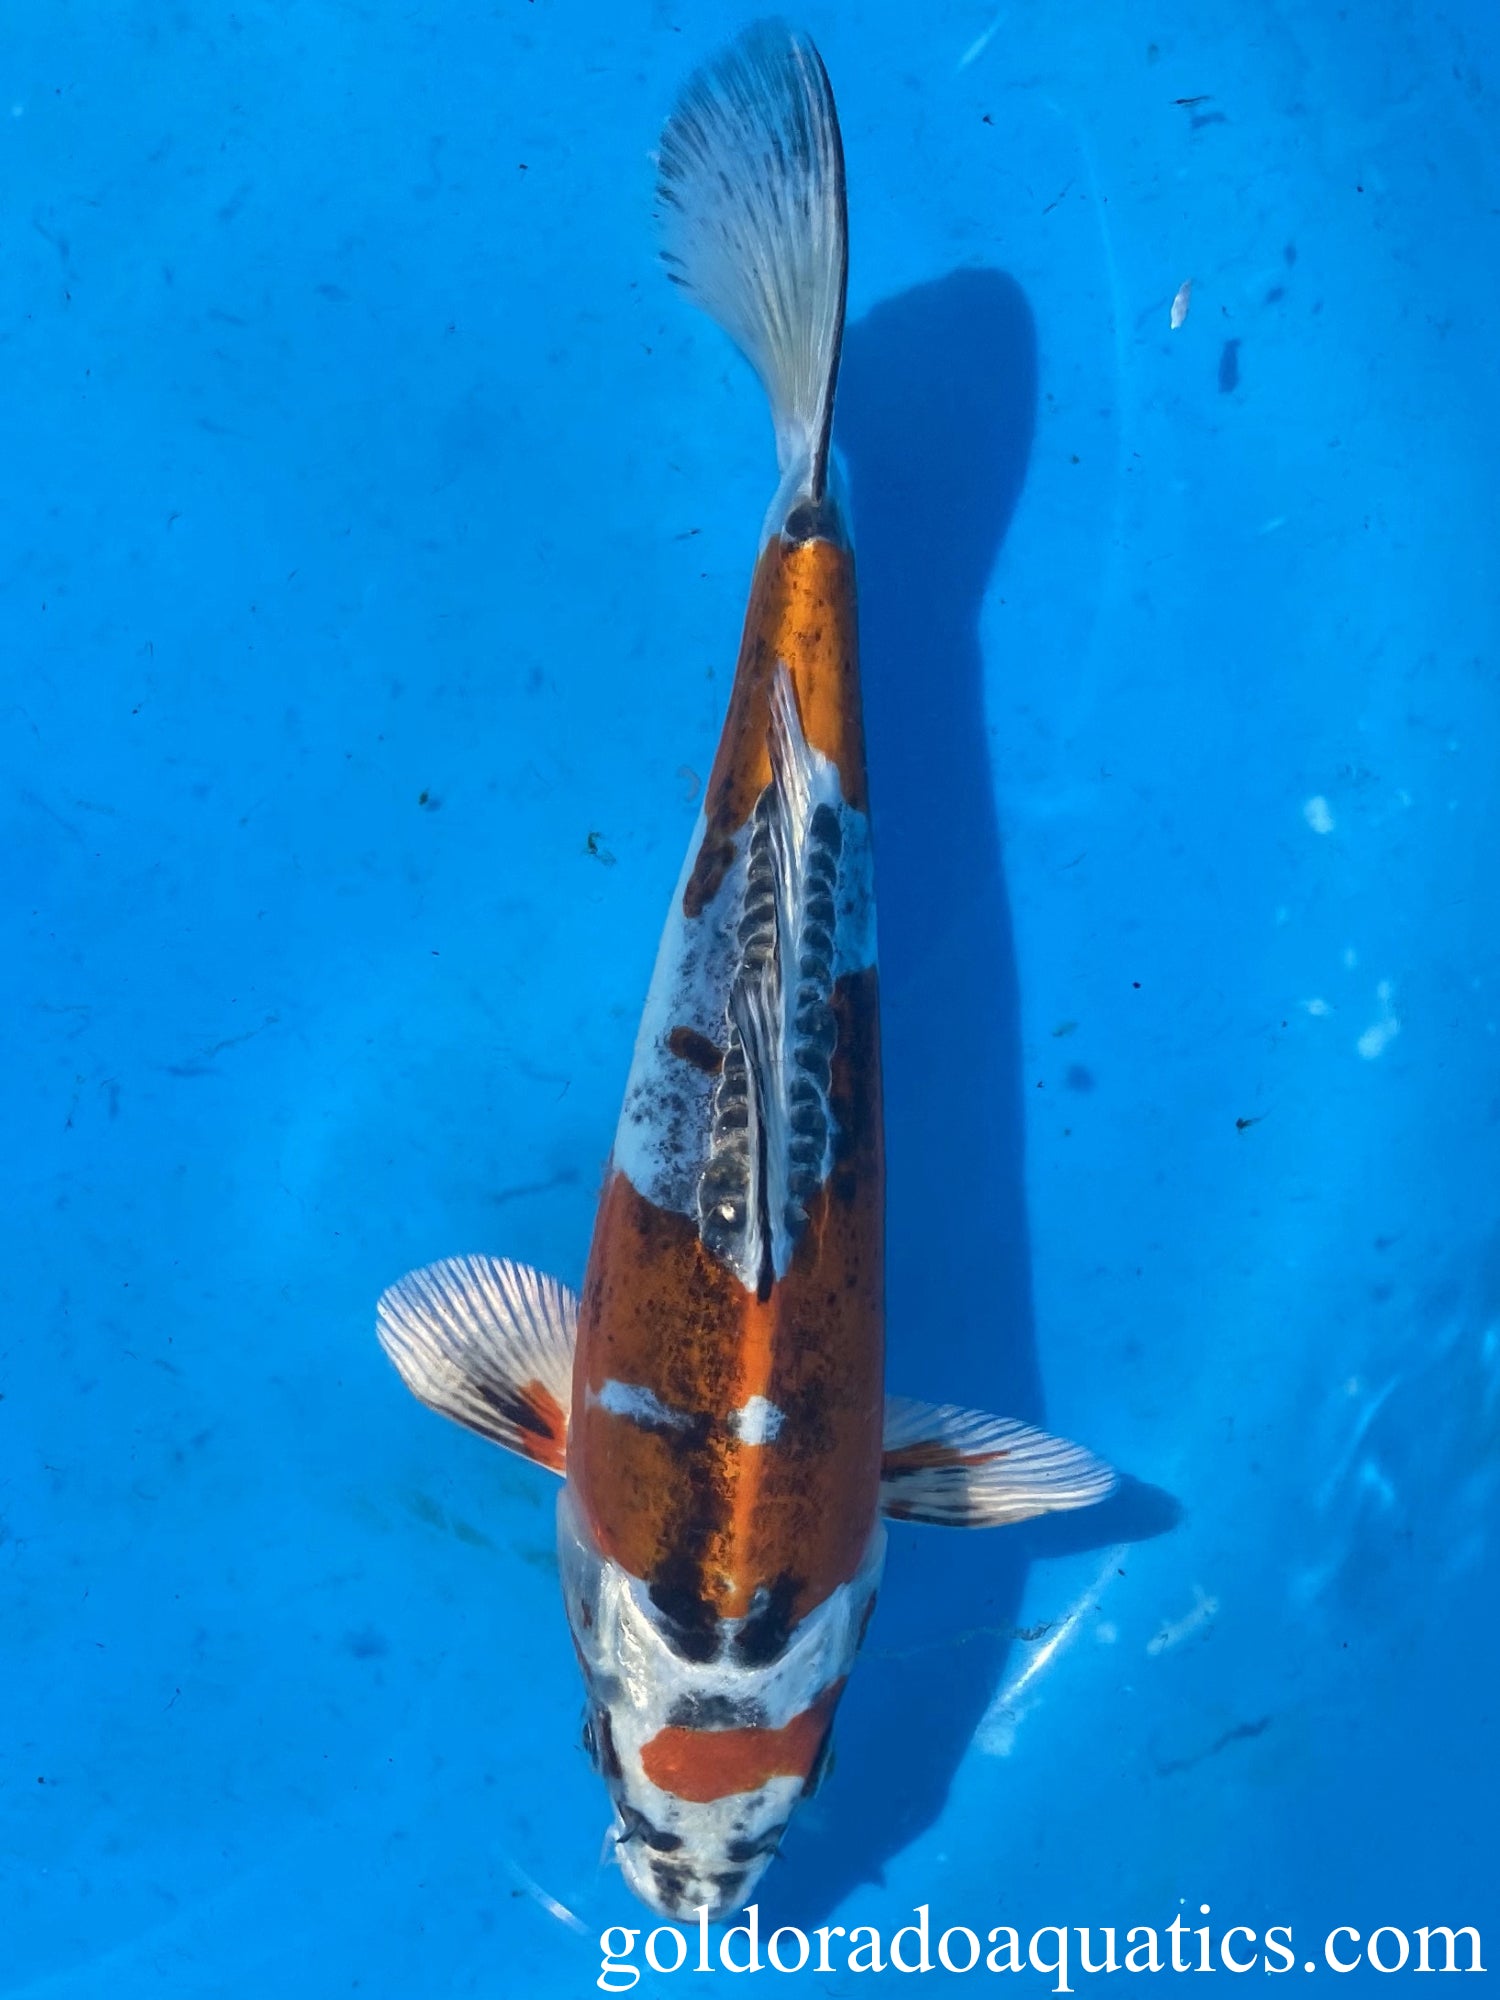 Image of a Kin Kikokuryu koi fish. A metallic scaleless tri colored koi fish consisting of red, black, and white.